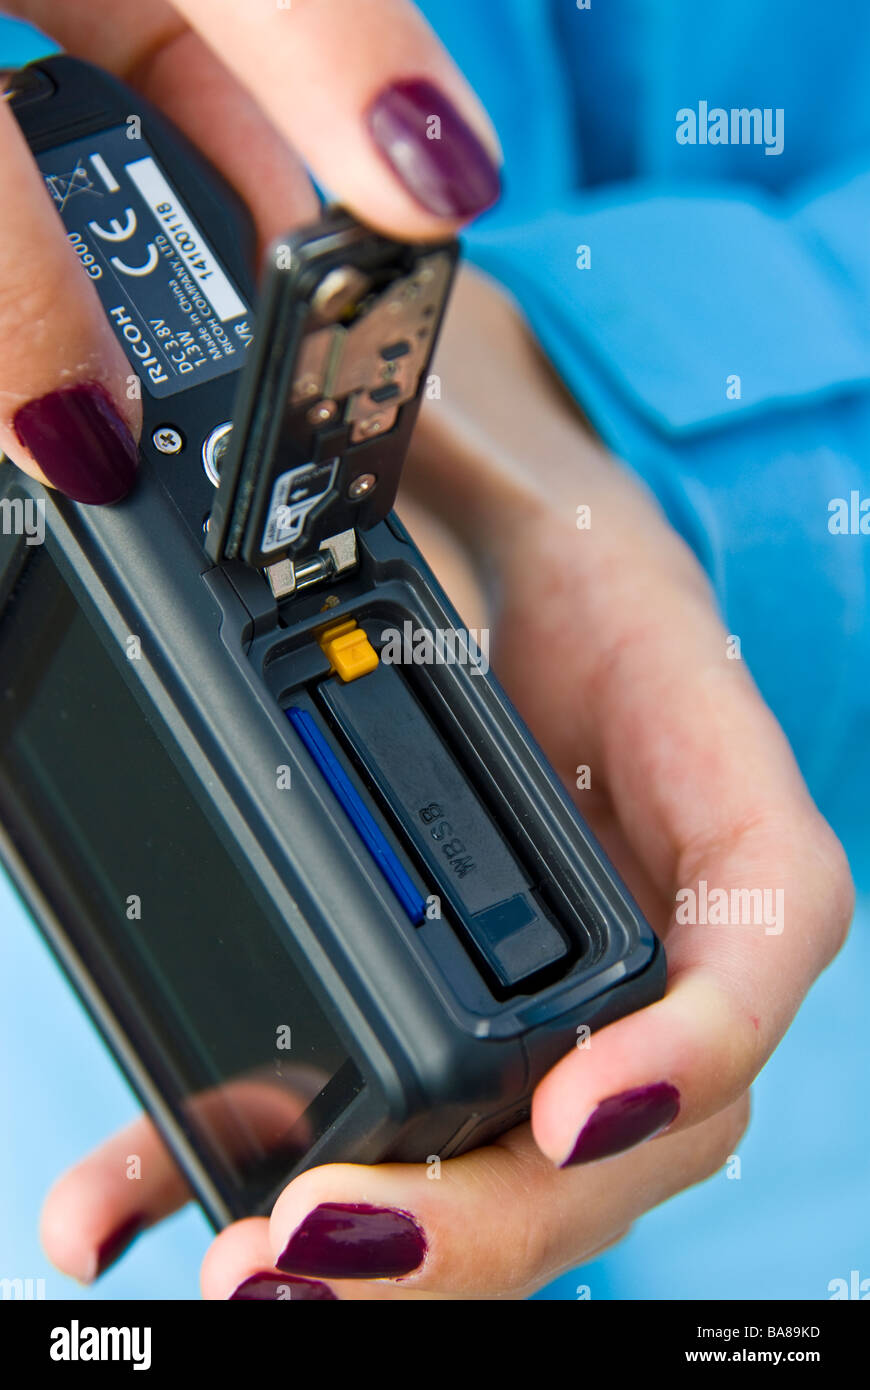 Girl compact digital camera showing battery and memory chip card storage |  Finger Batterie Chipkarte digitale Kompakt Kamera Stock Photo - Alamy